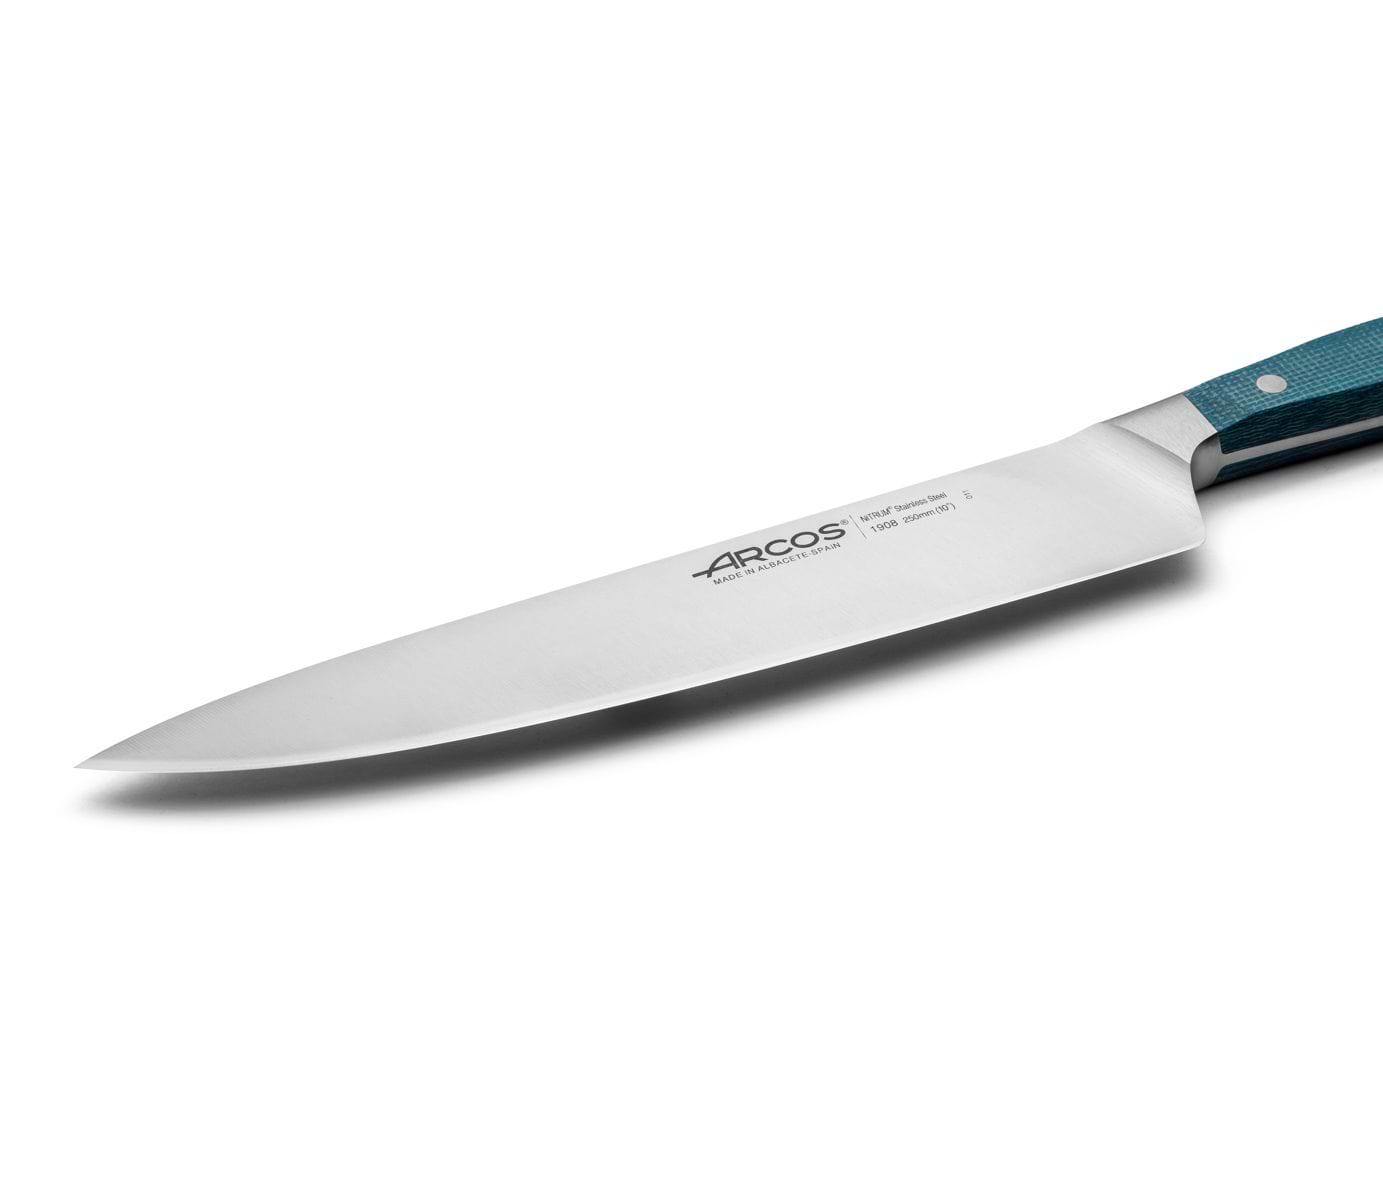 Brooklyn Series 10 Chef's Knife